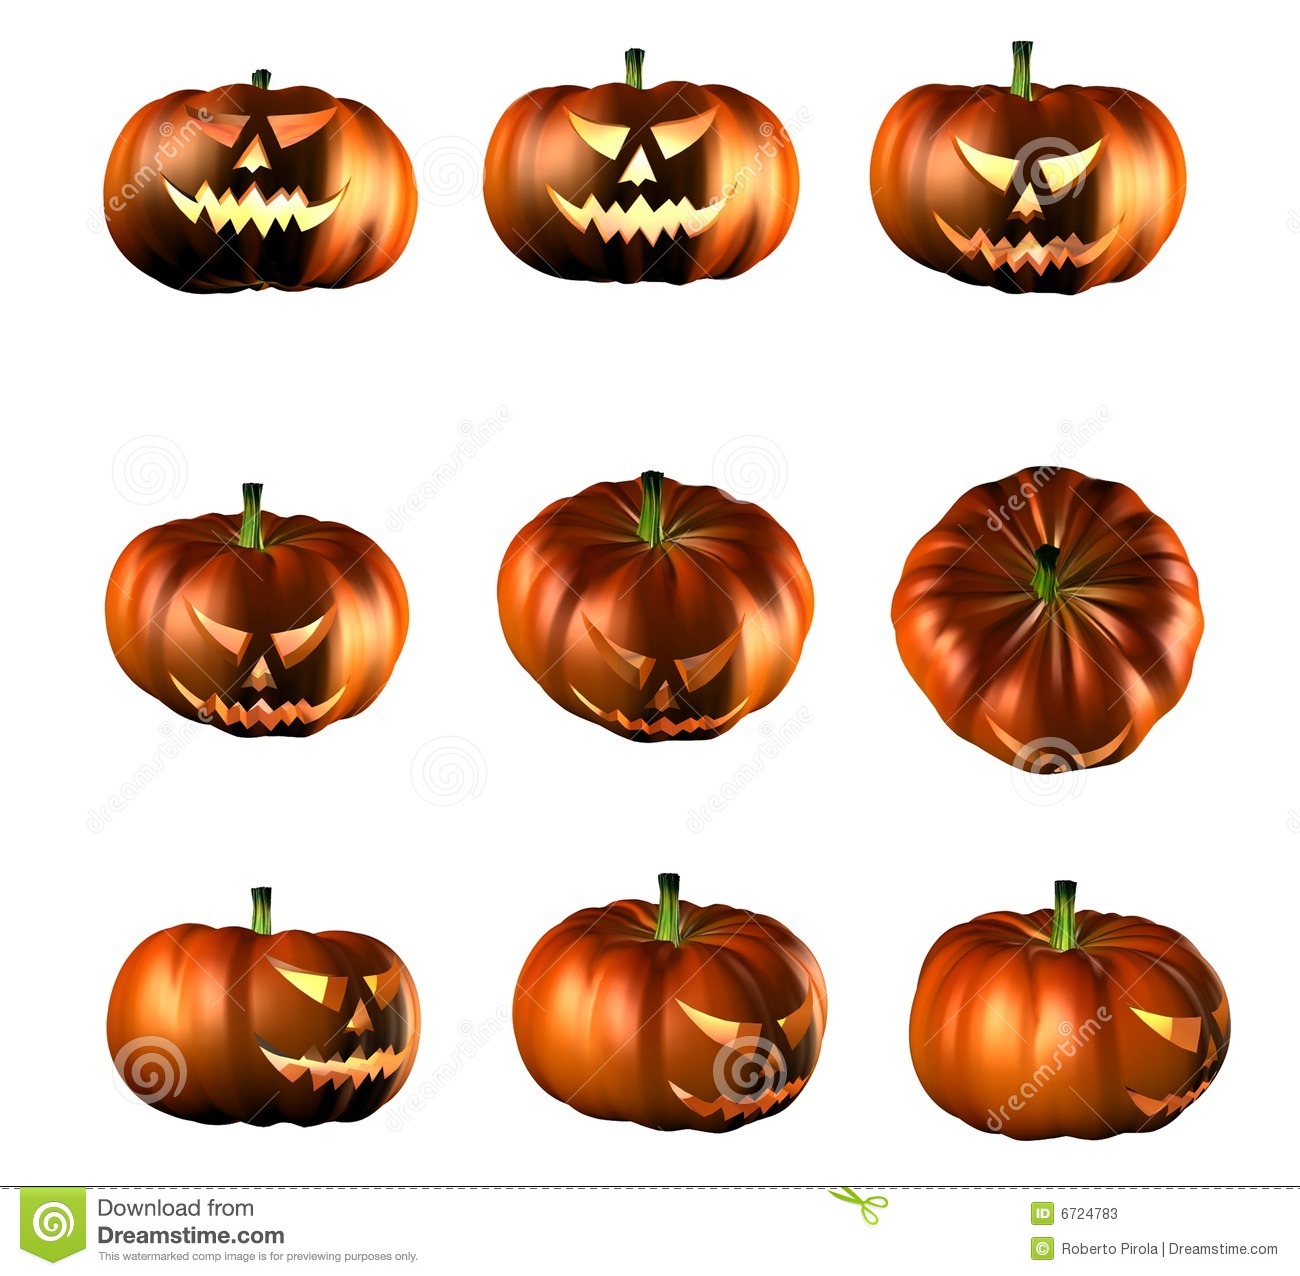 3d Illustration Of Halloween Pumpkins In Different Setup